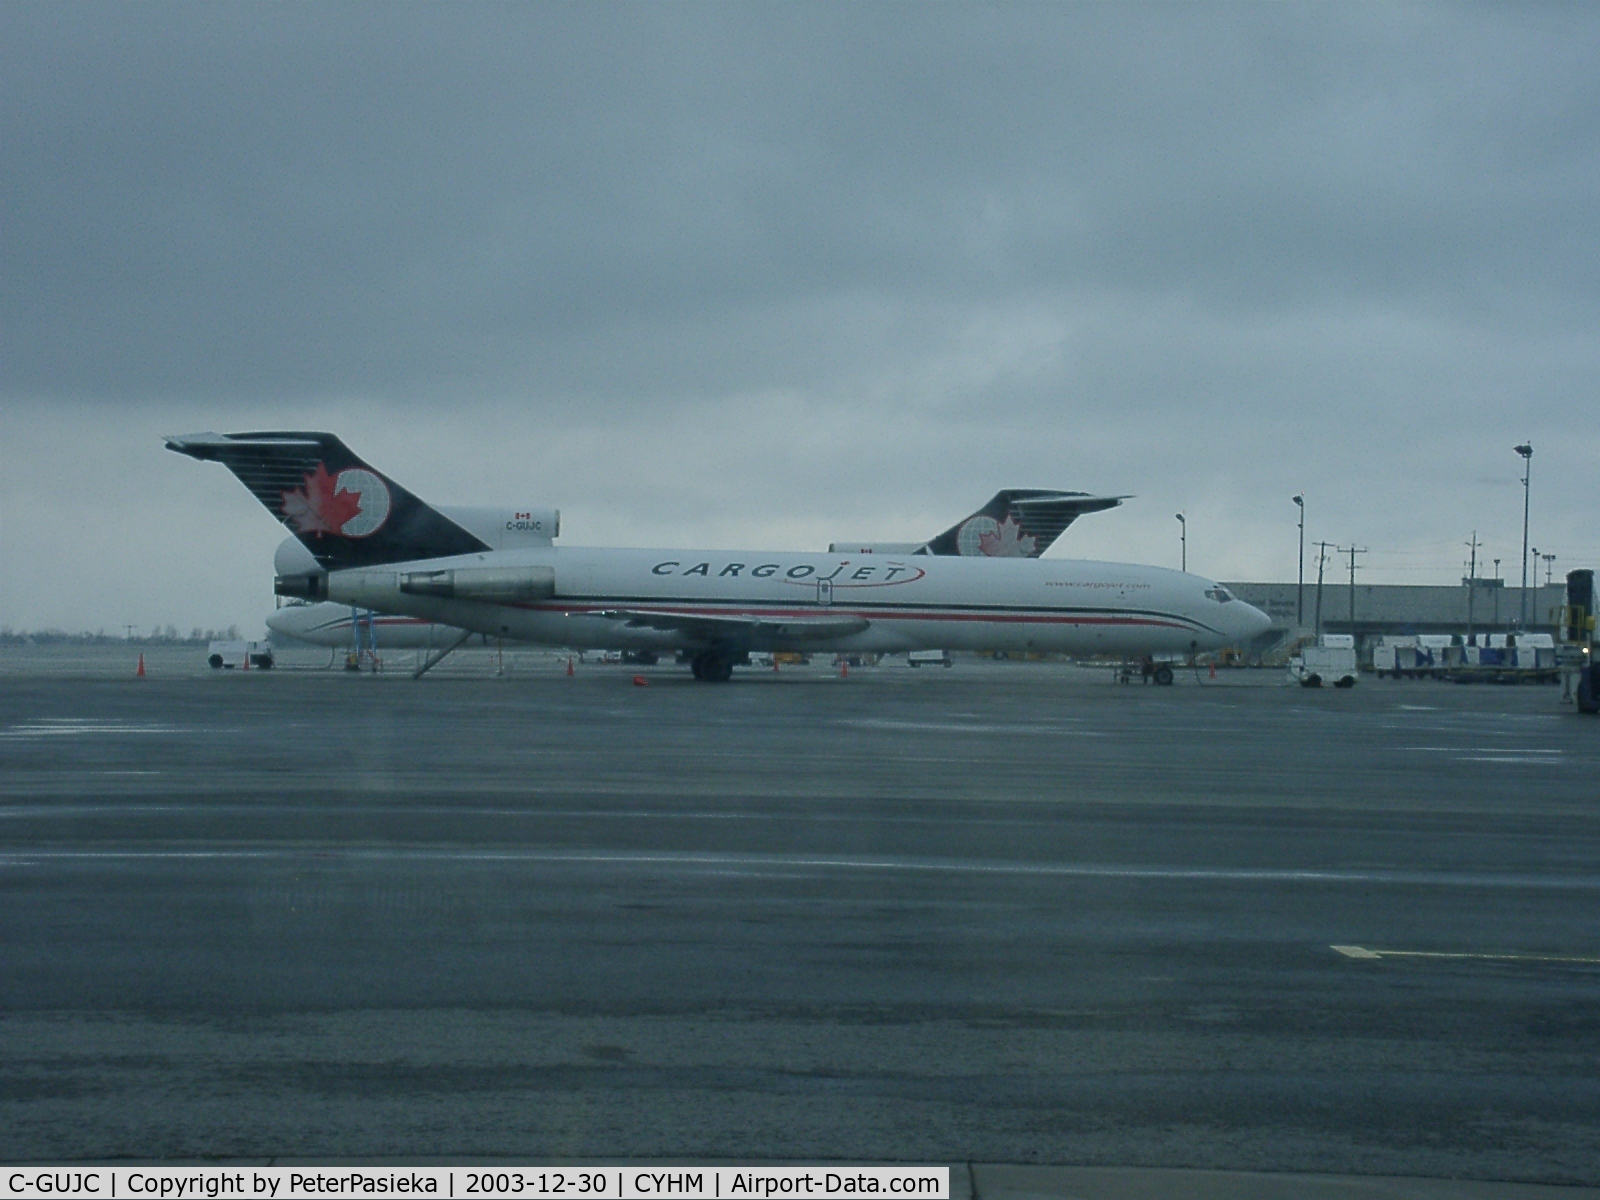 C-GUJC, 1979 Boeing 727-260 C/N 21979, Cargojet @ Hamilton Airport, Ontario Canada